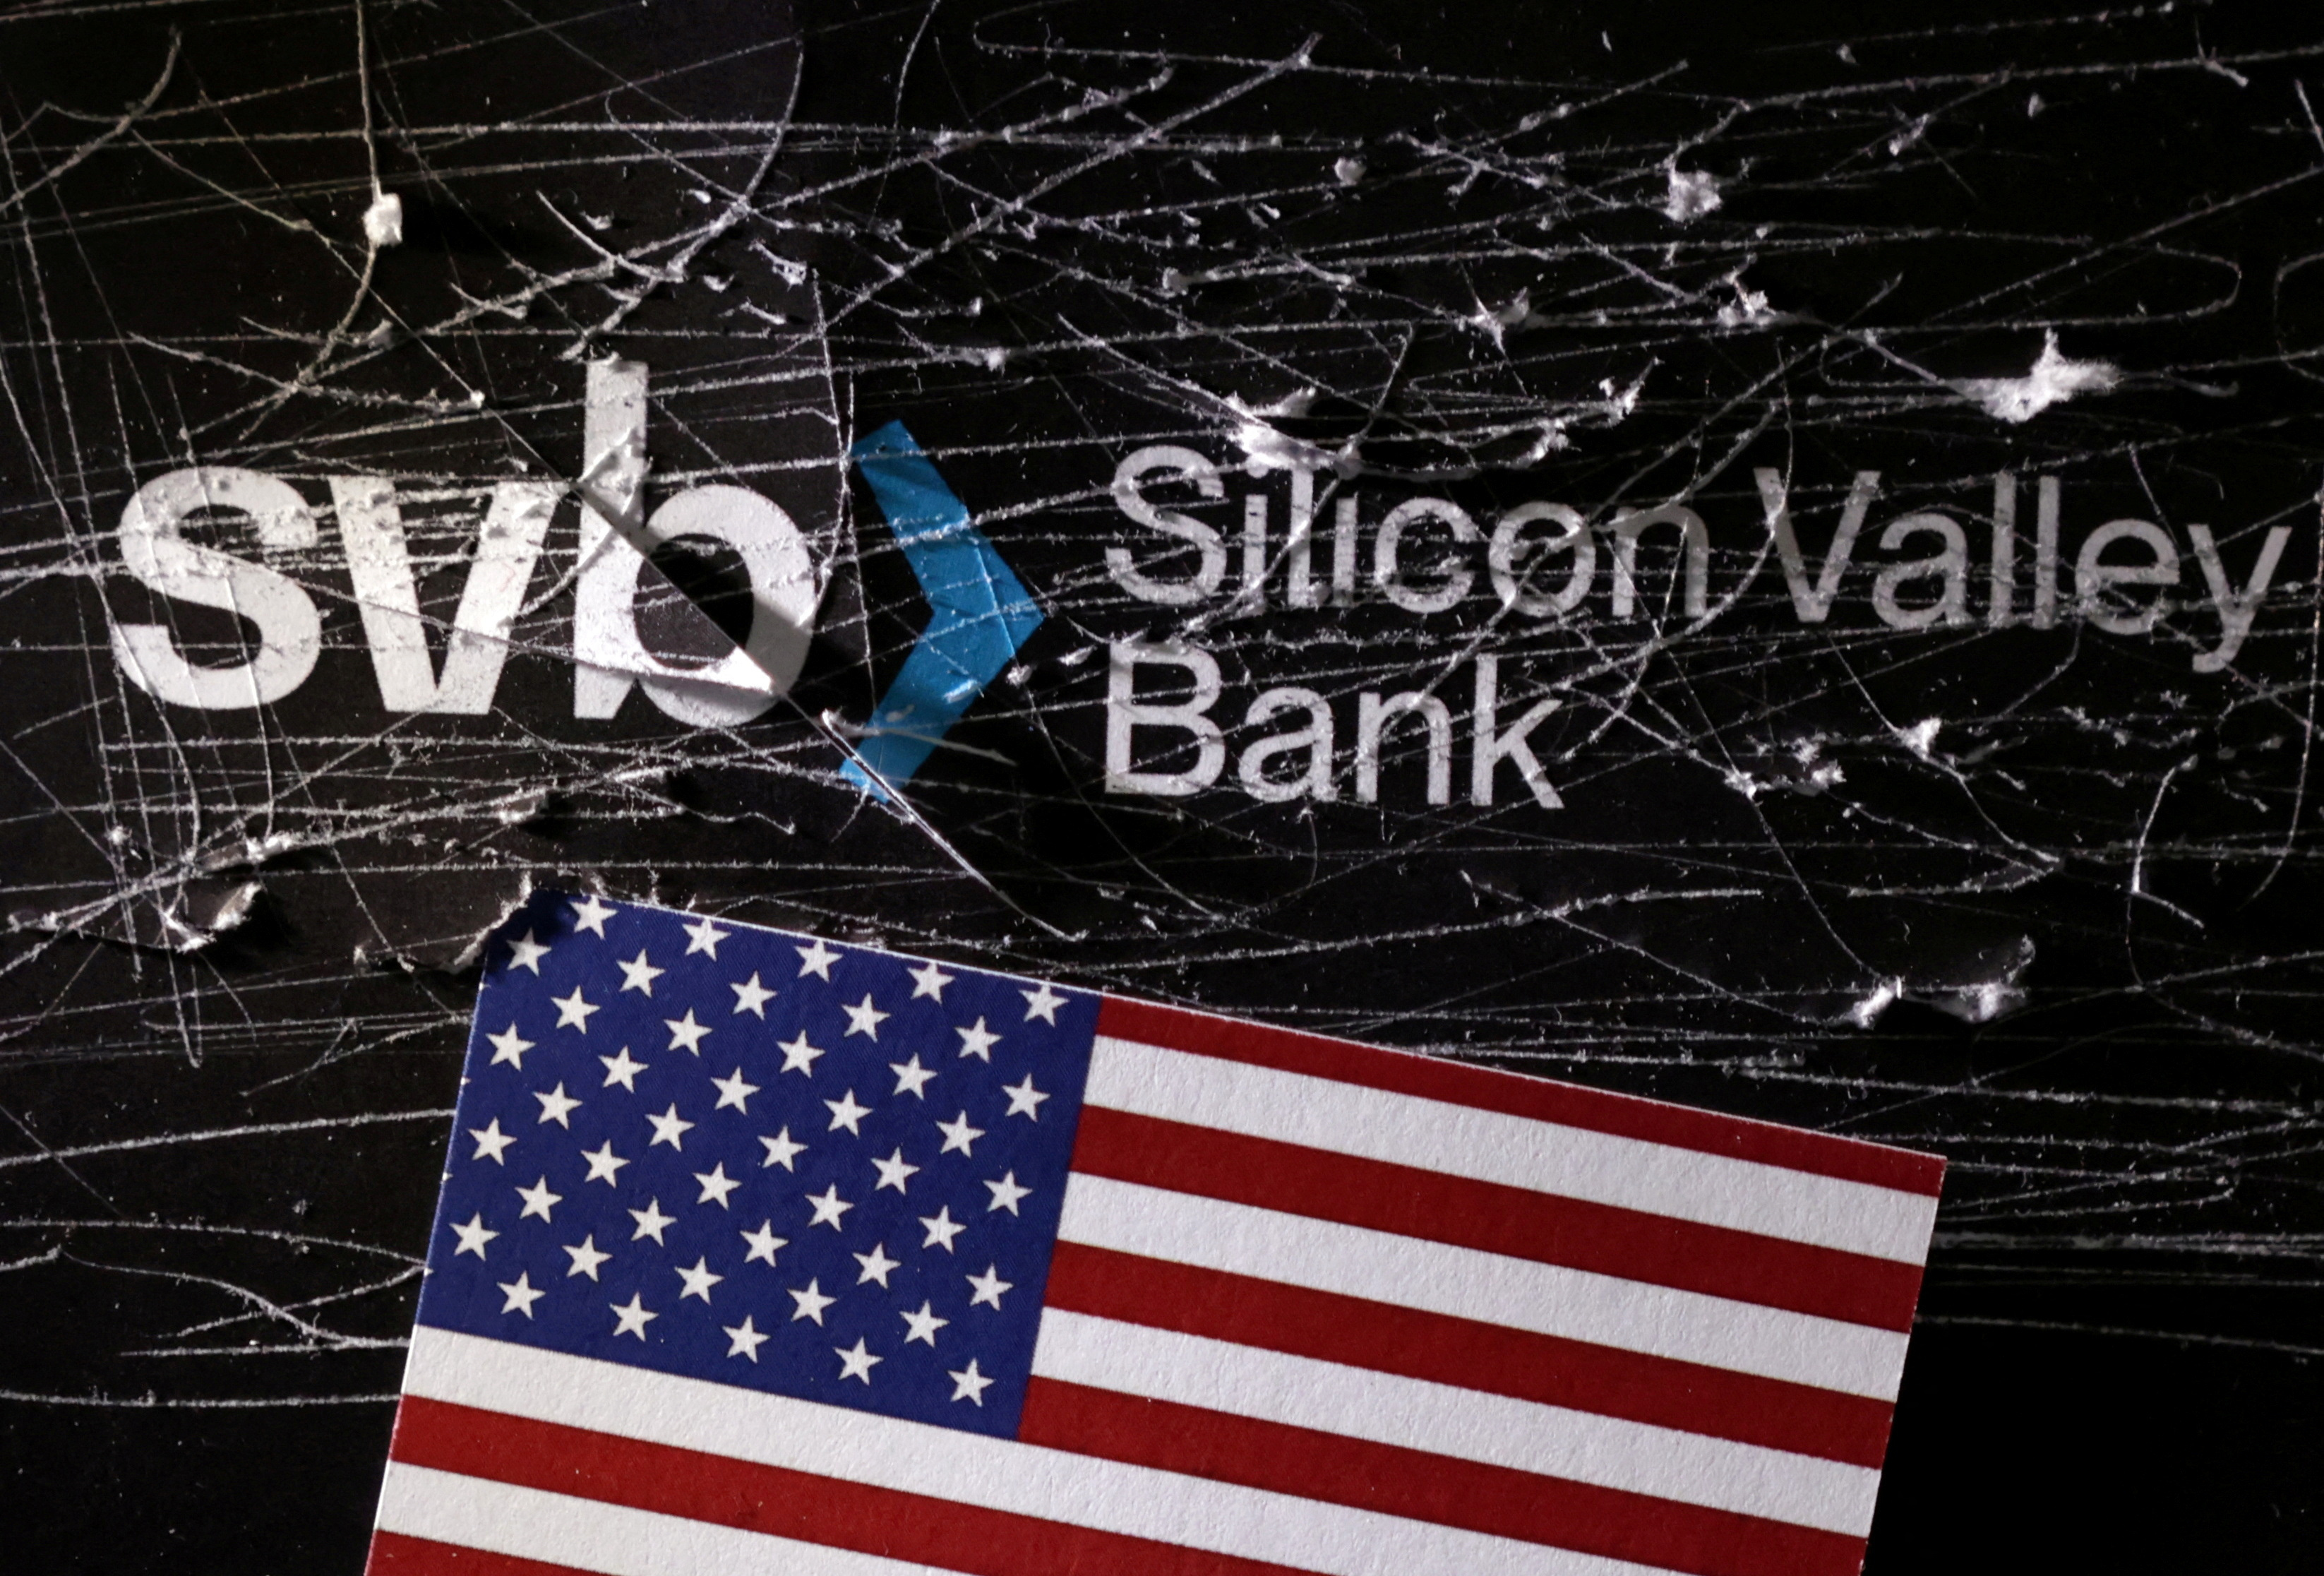 Illustration shows destroyed SVB (Silicon Valley Bank) logo and U.S. flag